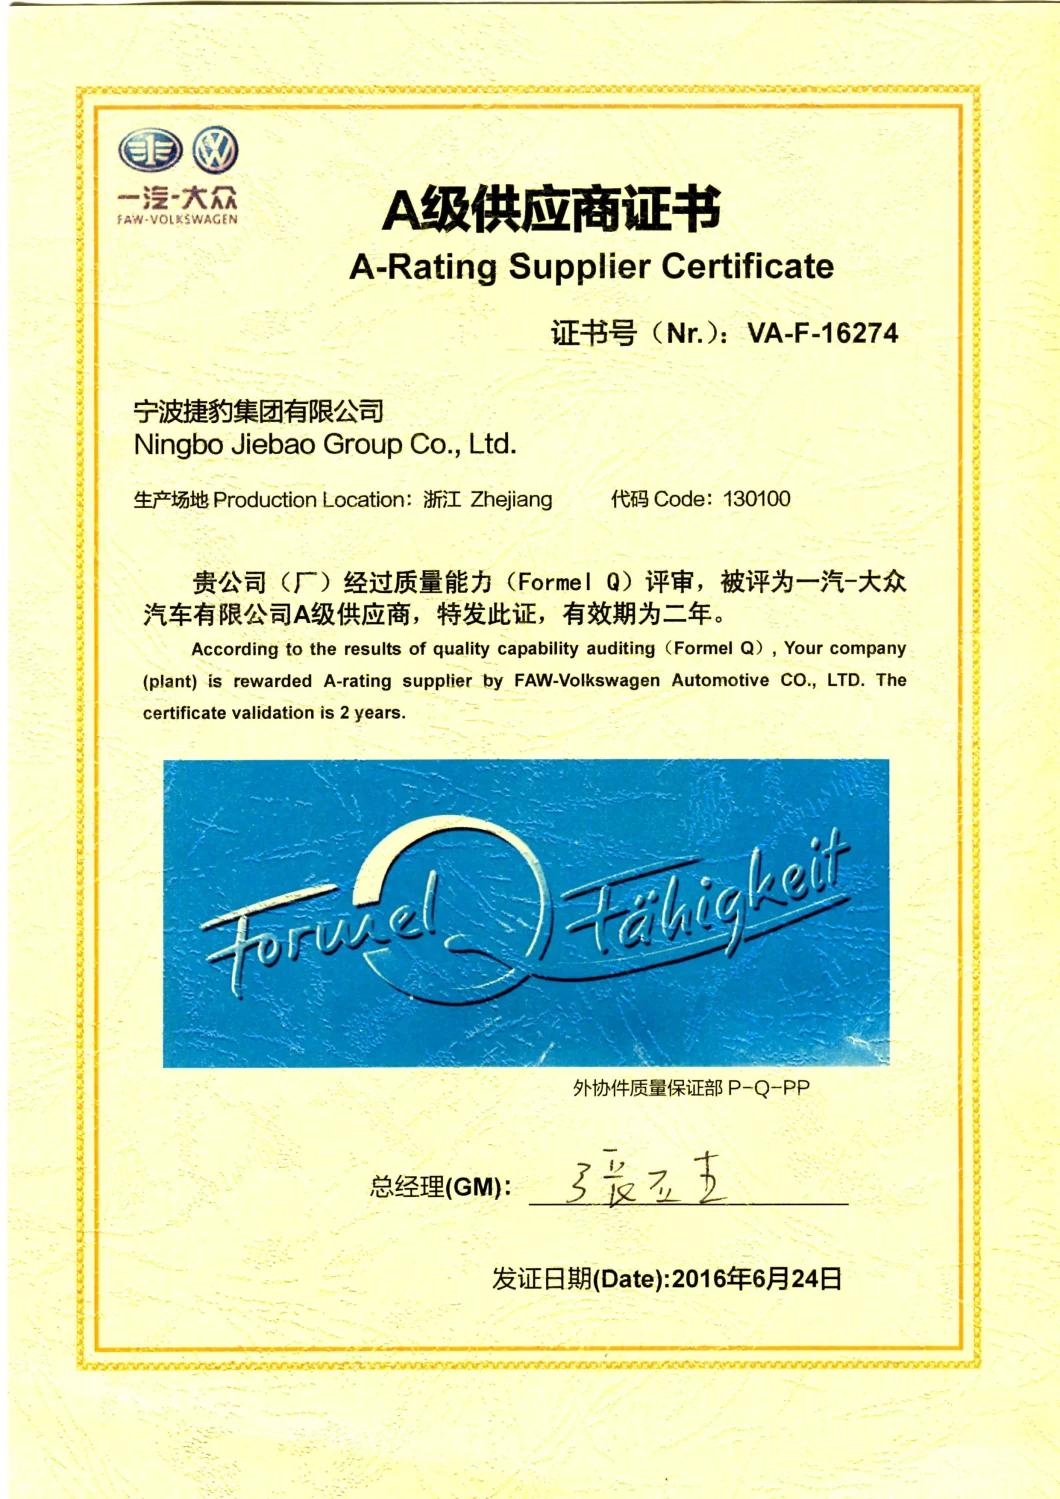 GM Belt Maker - Jiebao High Quality Transmission Parts Fan Automotive Textile Garment Packaging Agricultural Machinery Drive Belt